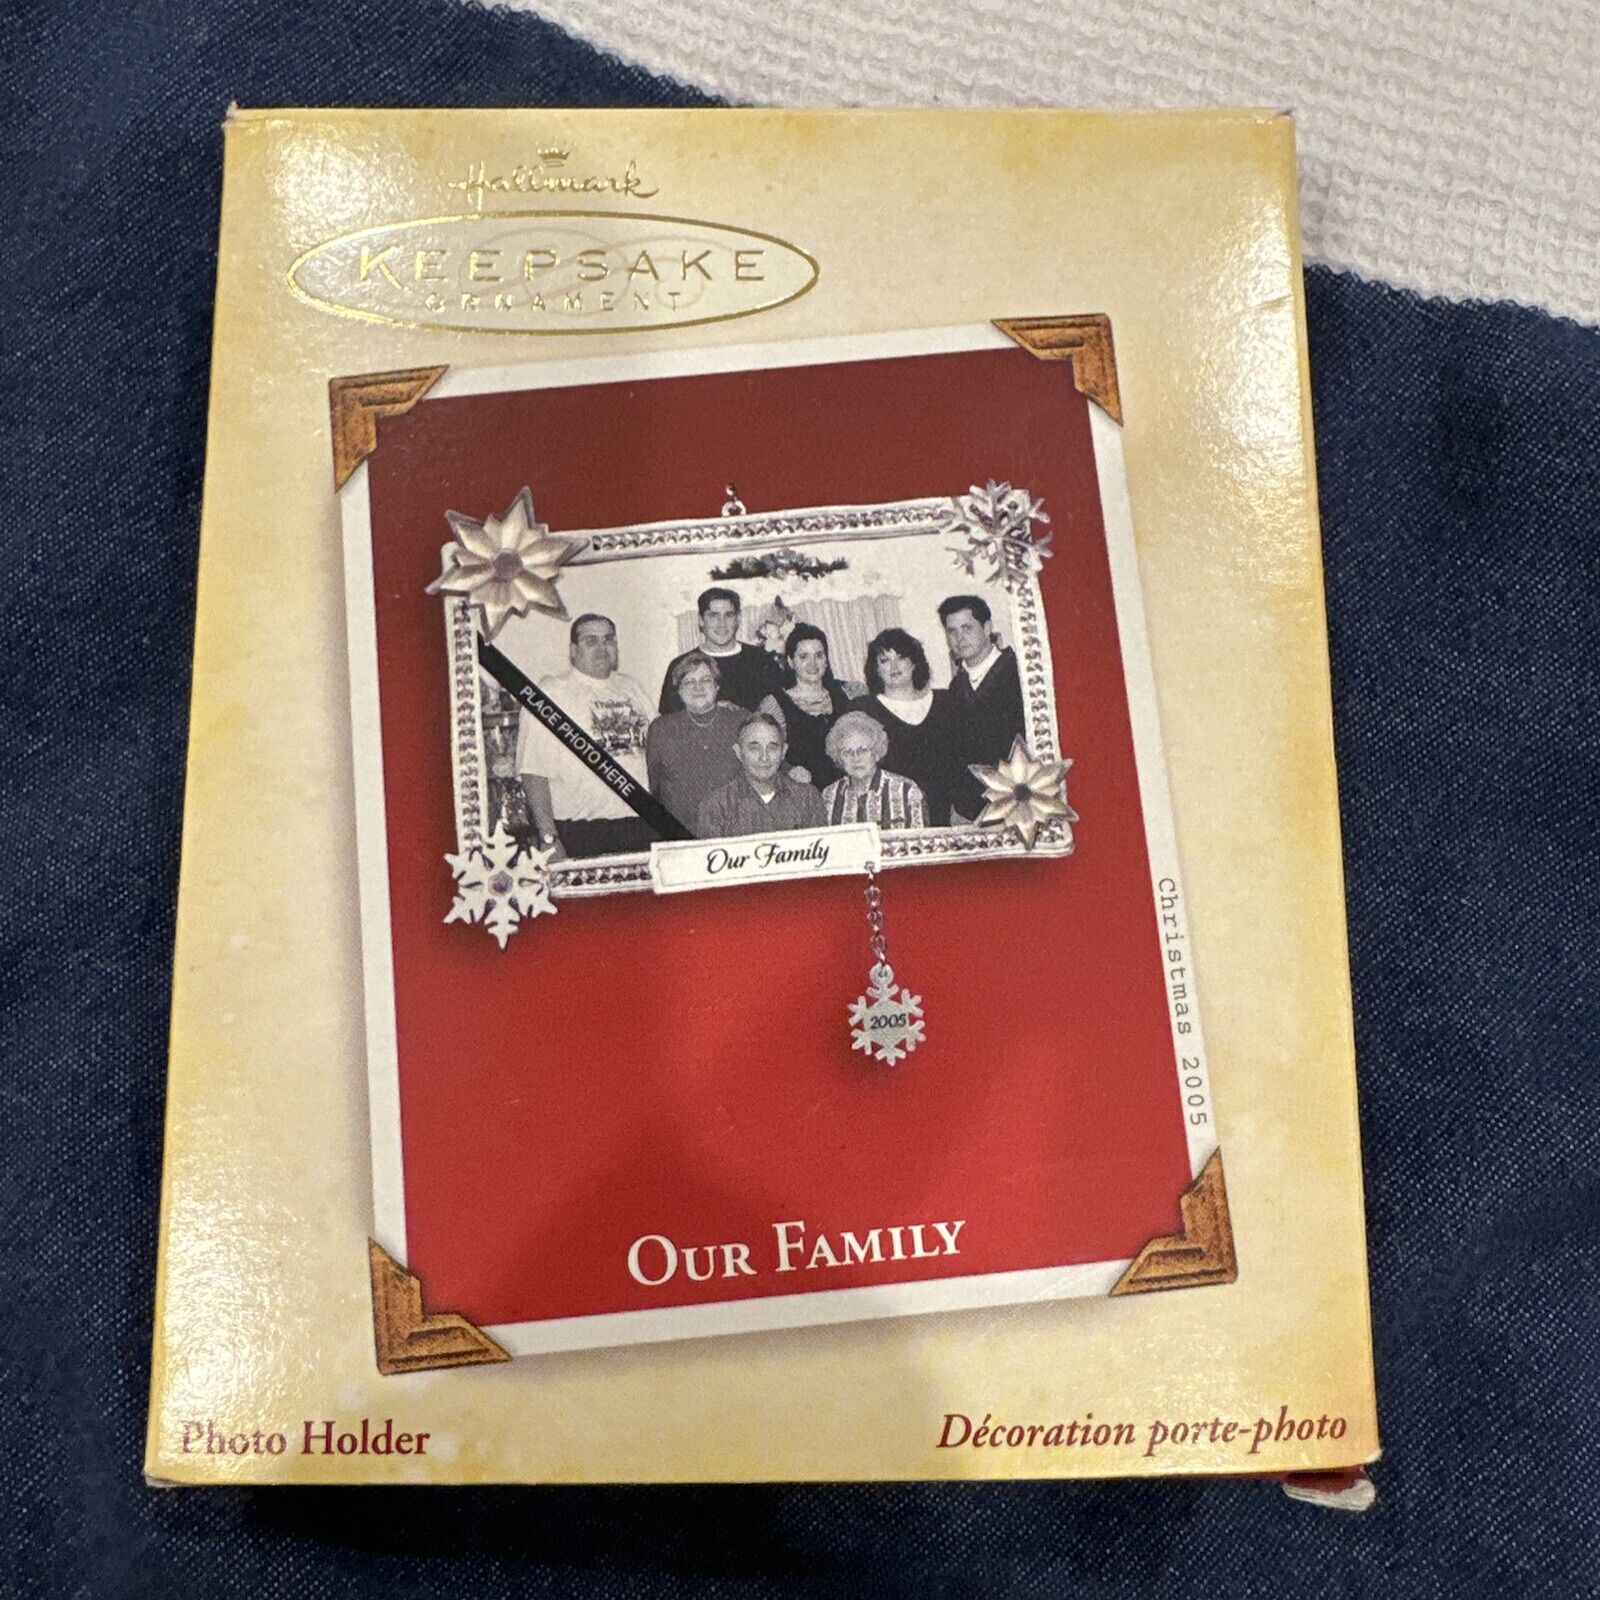 NEW IN BOX  2005 Hallmark Keepsake Ornament “Our Family”  Photo Holder